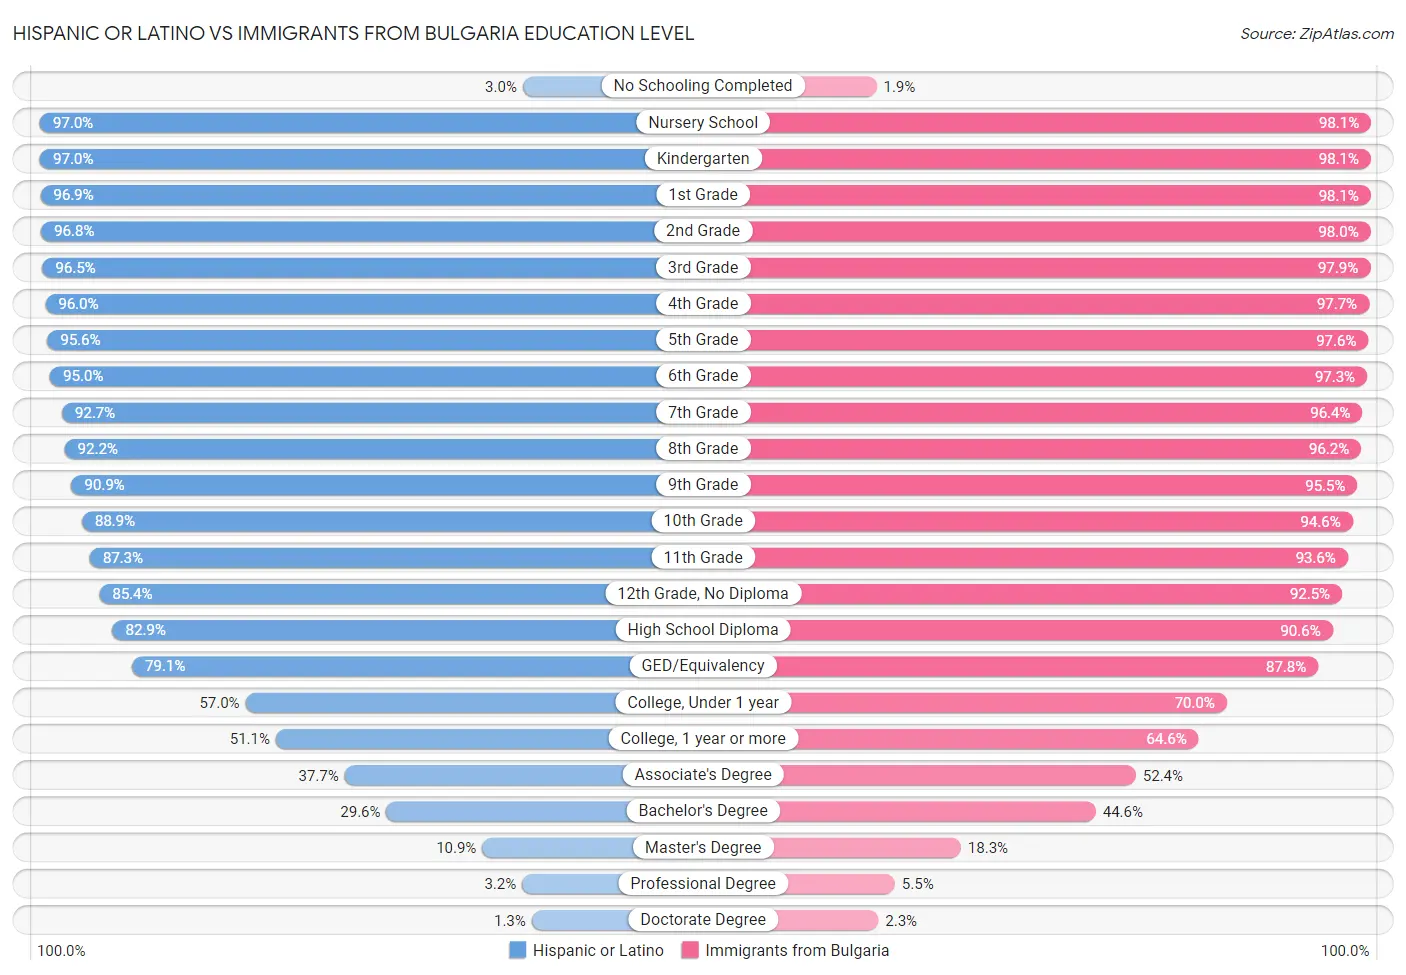 Hispanic or Latino vs Immigrants from Bulgaria Education Level